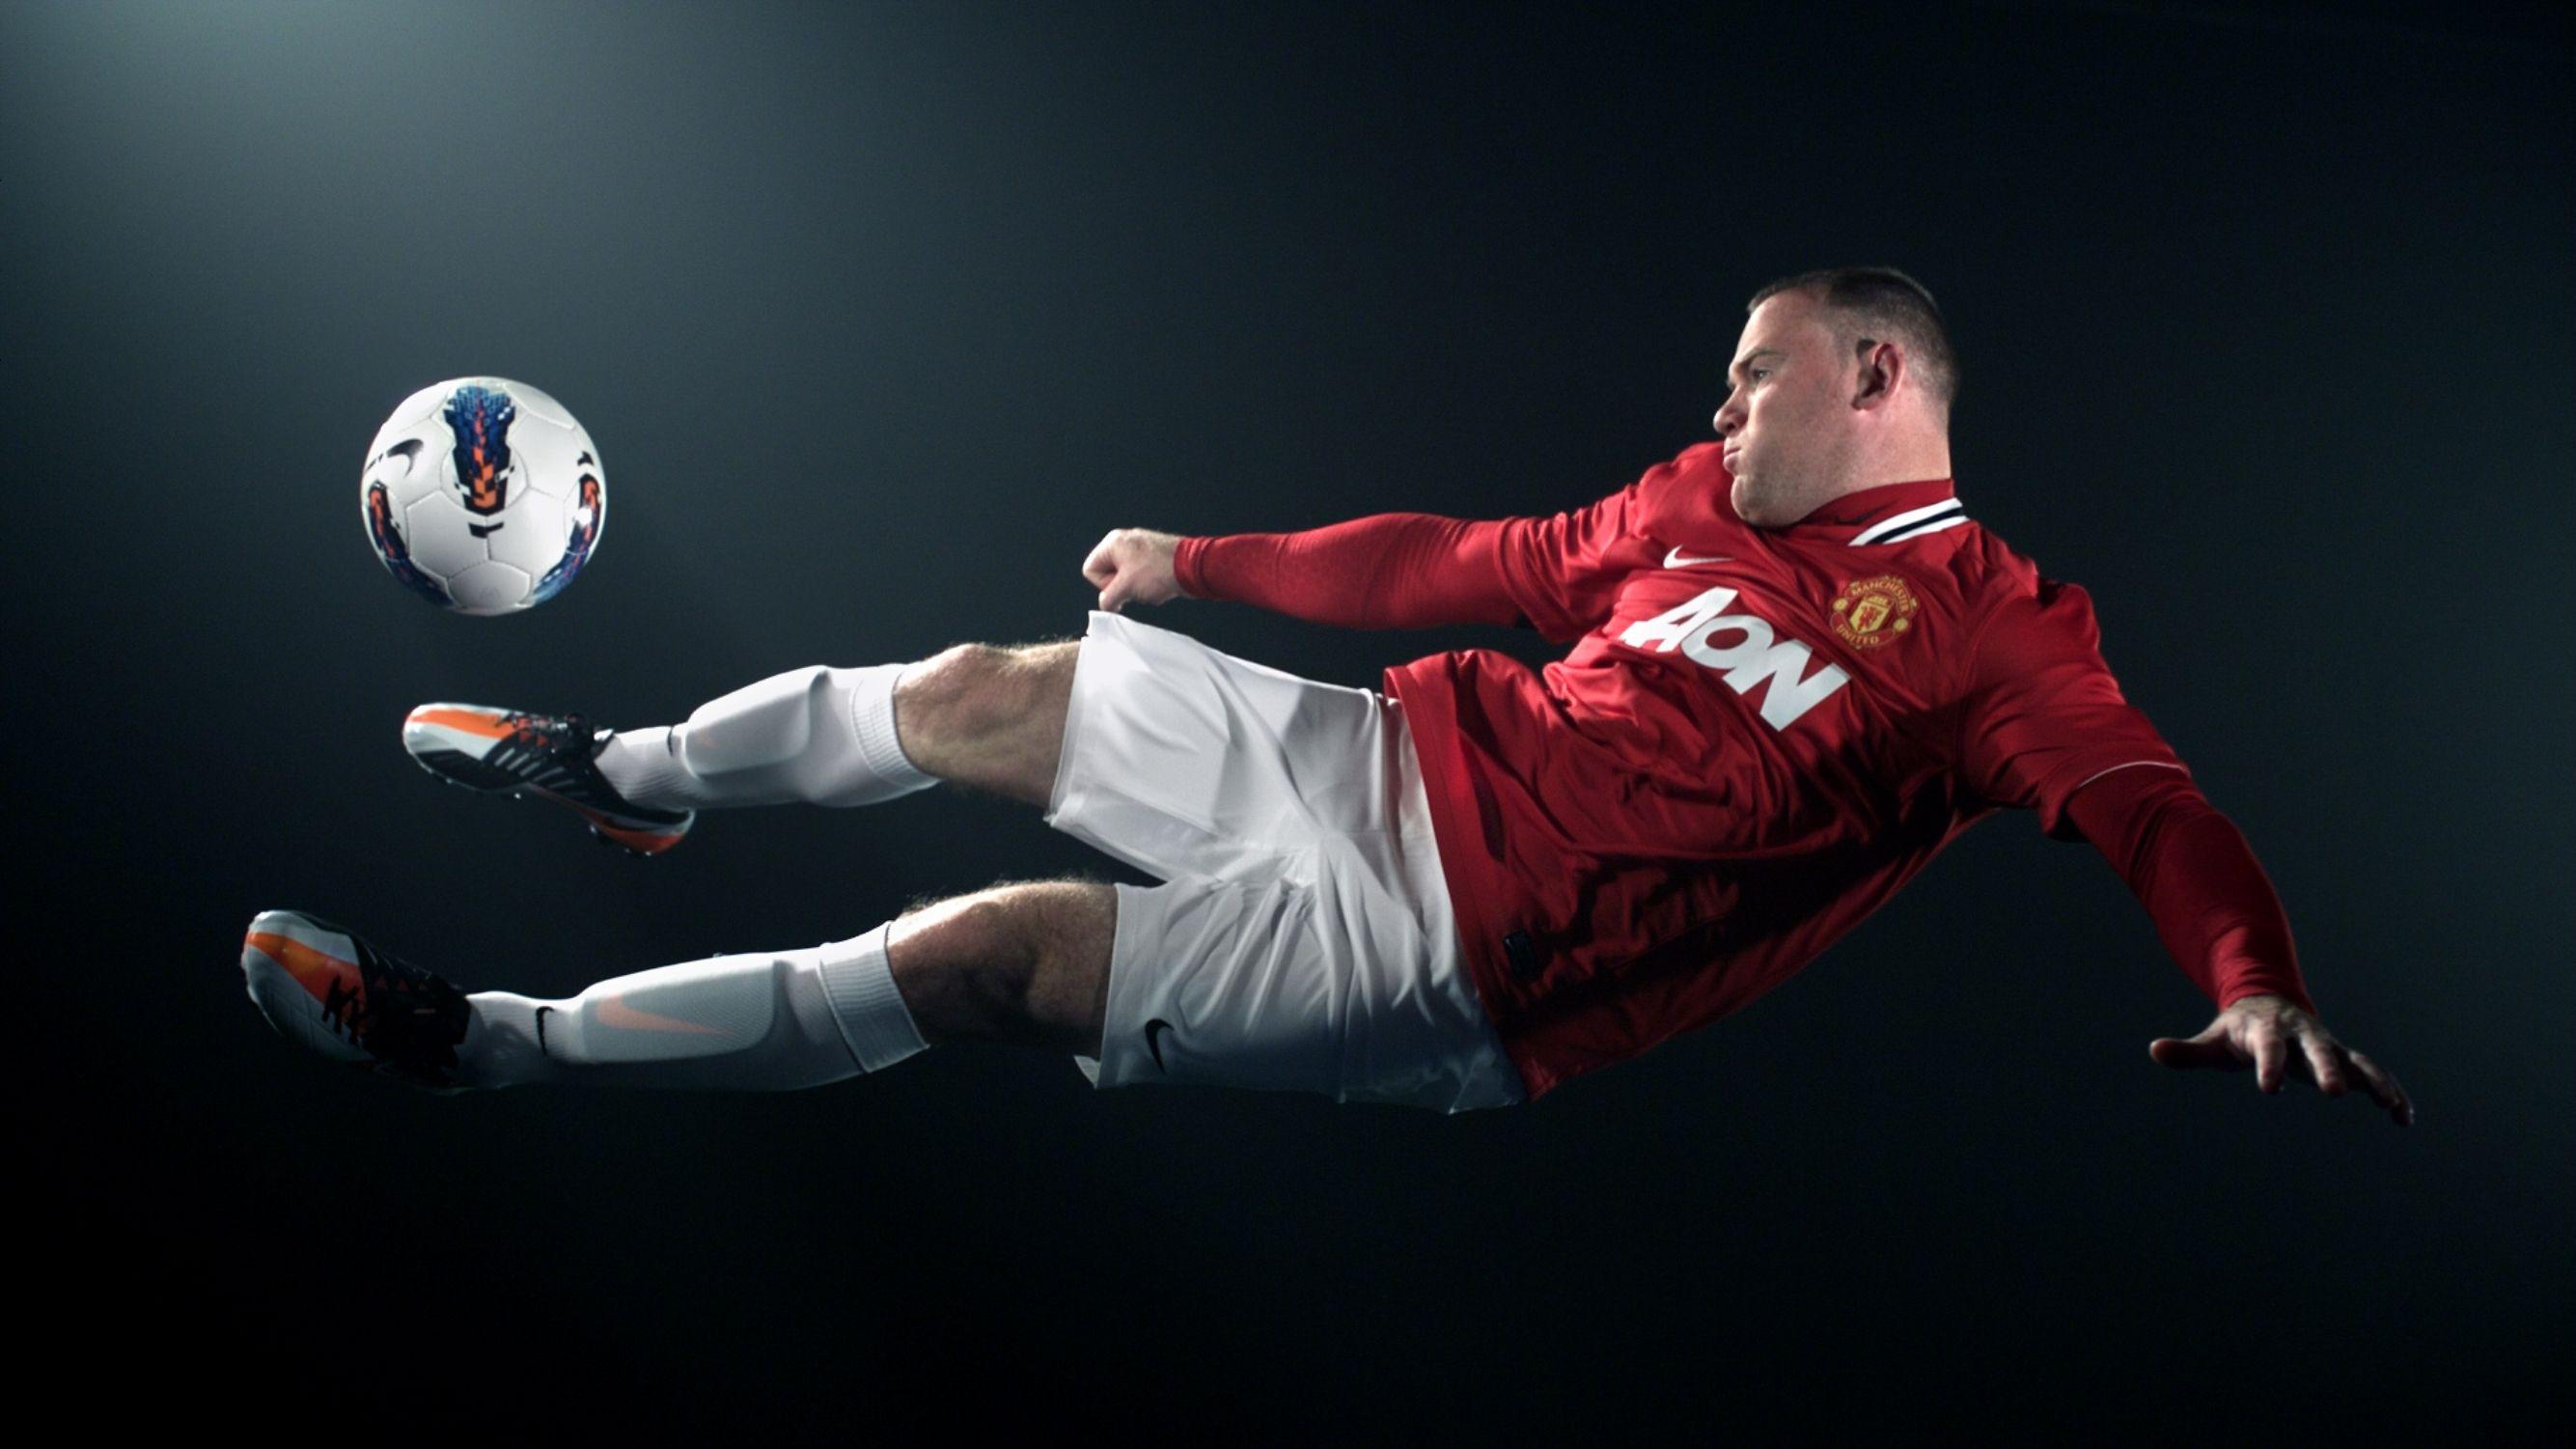 Wayne Rooney overhead kick in line for global award